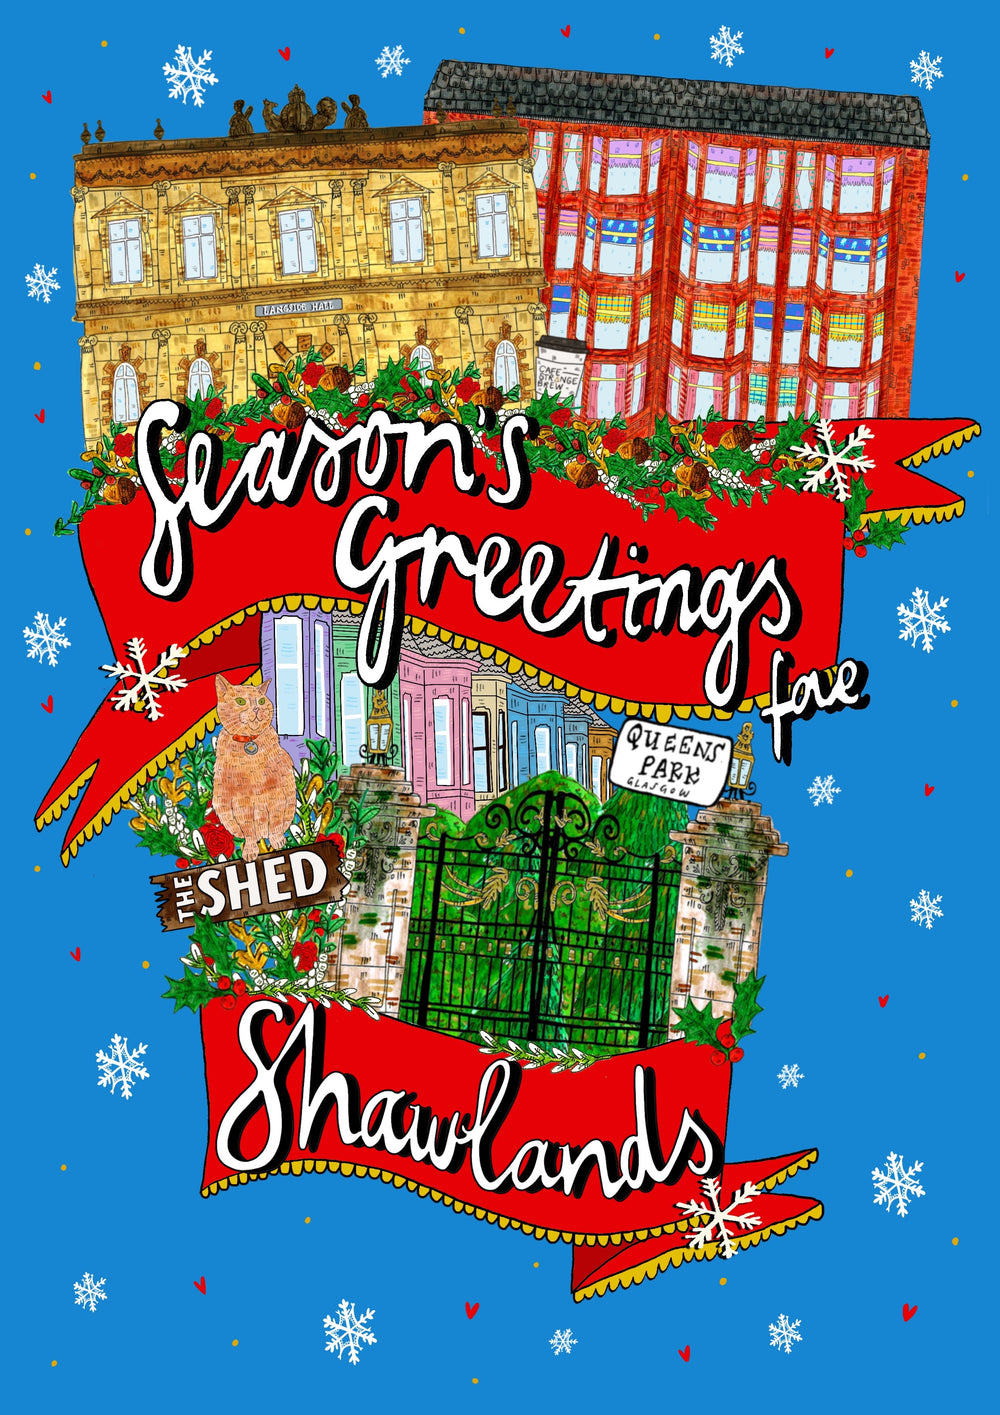 Seasons Greetings fae Shawlands! Xmas Card